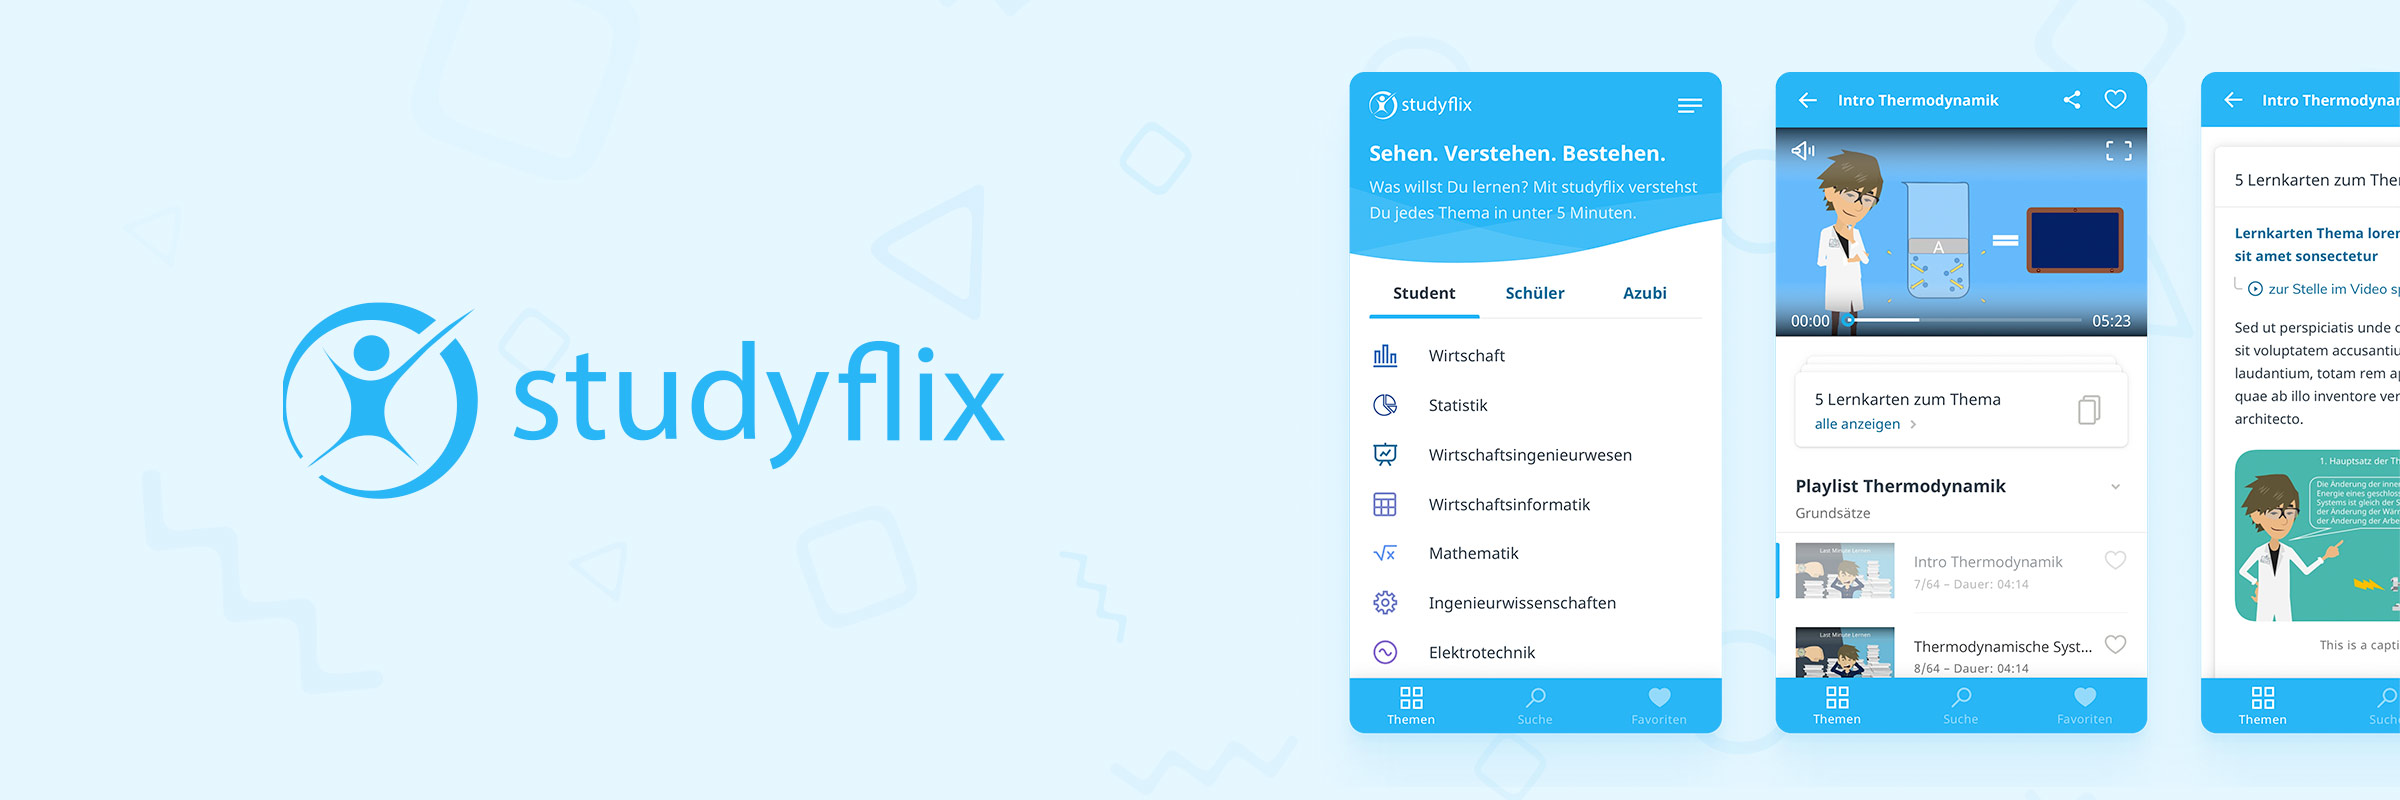 Studyflix E-Learning App